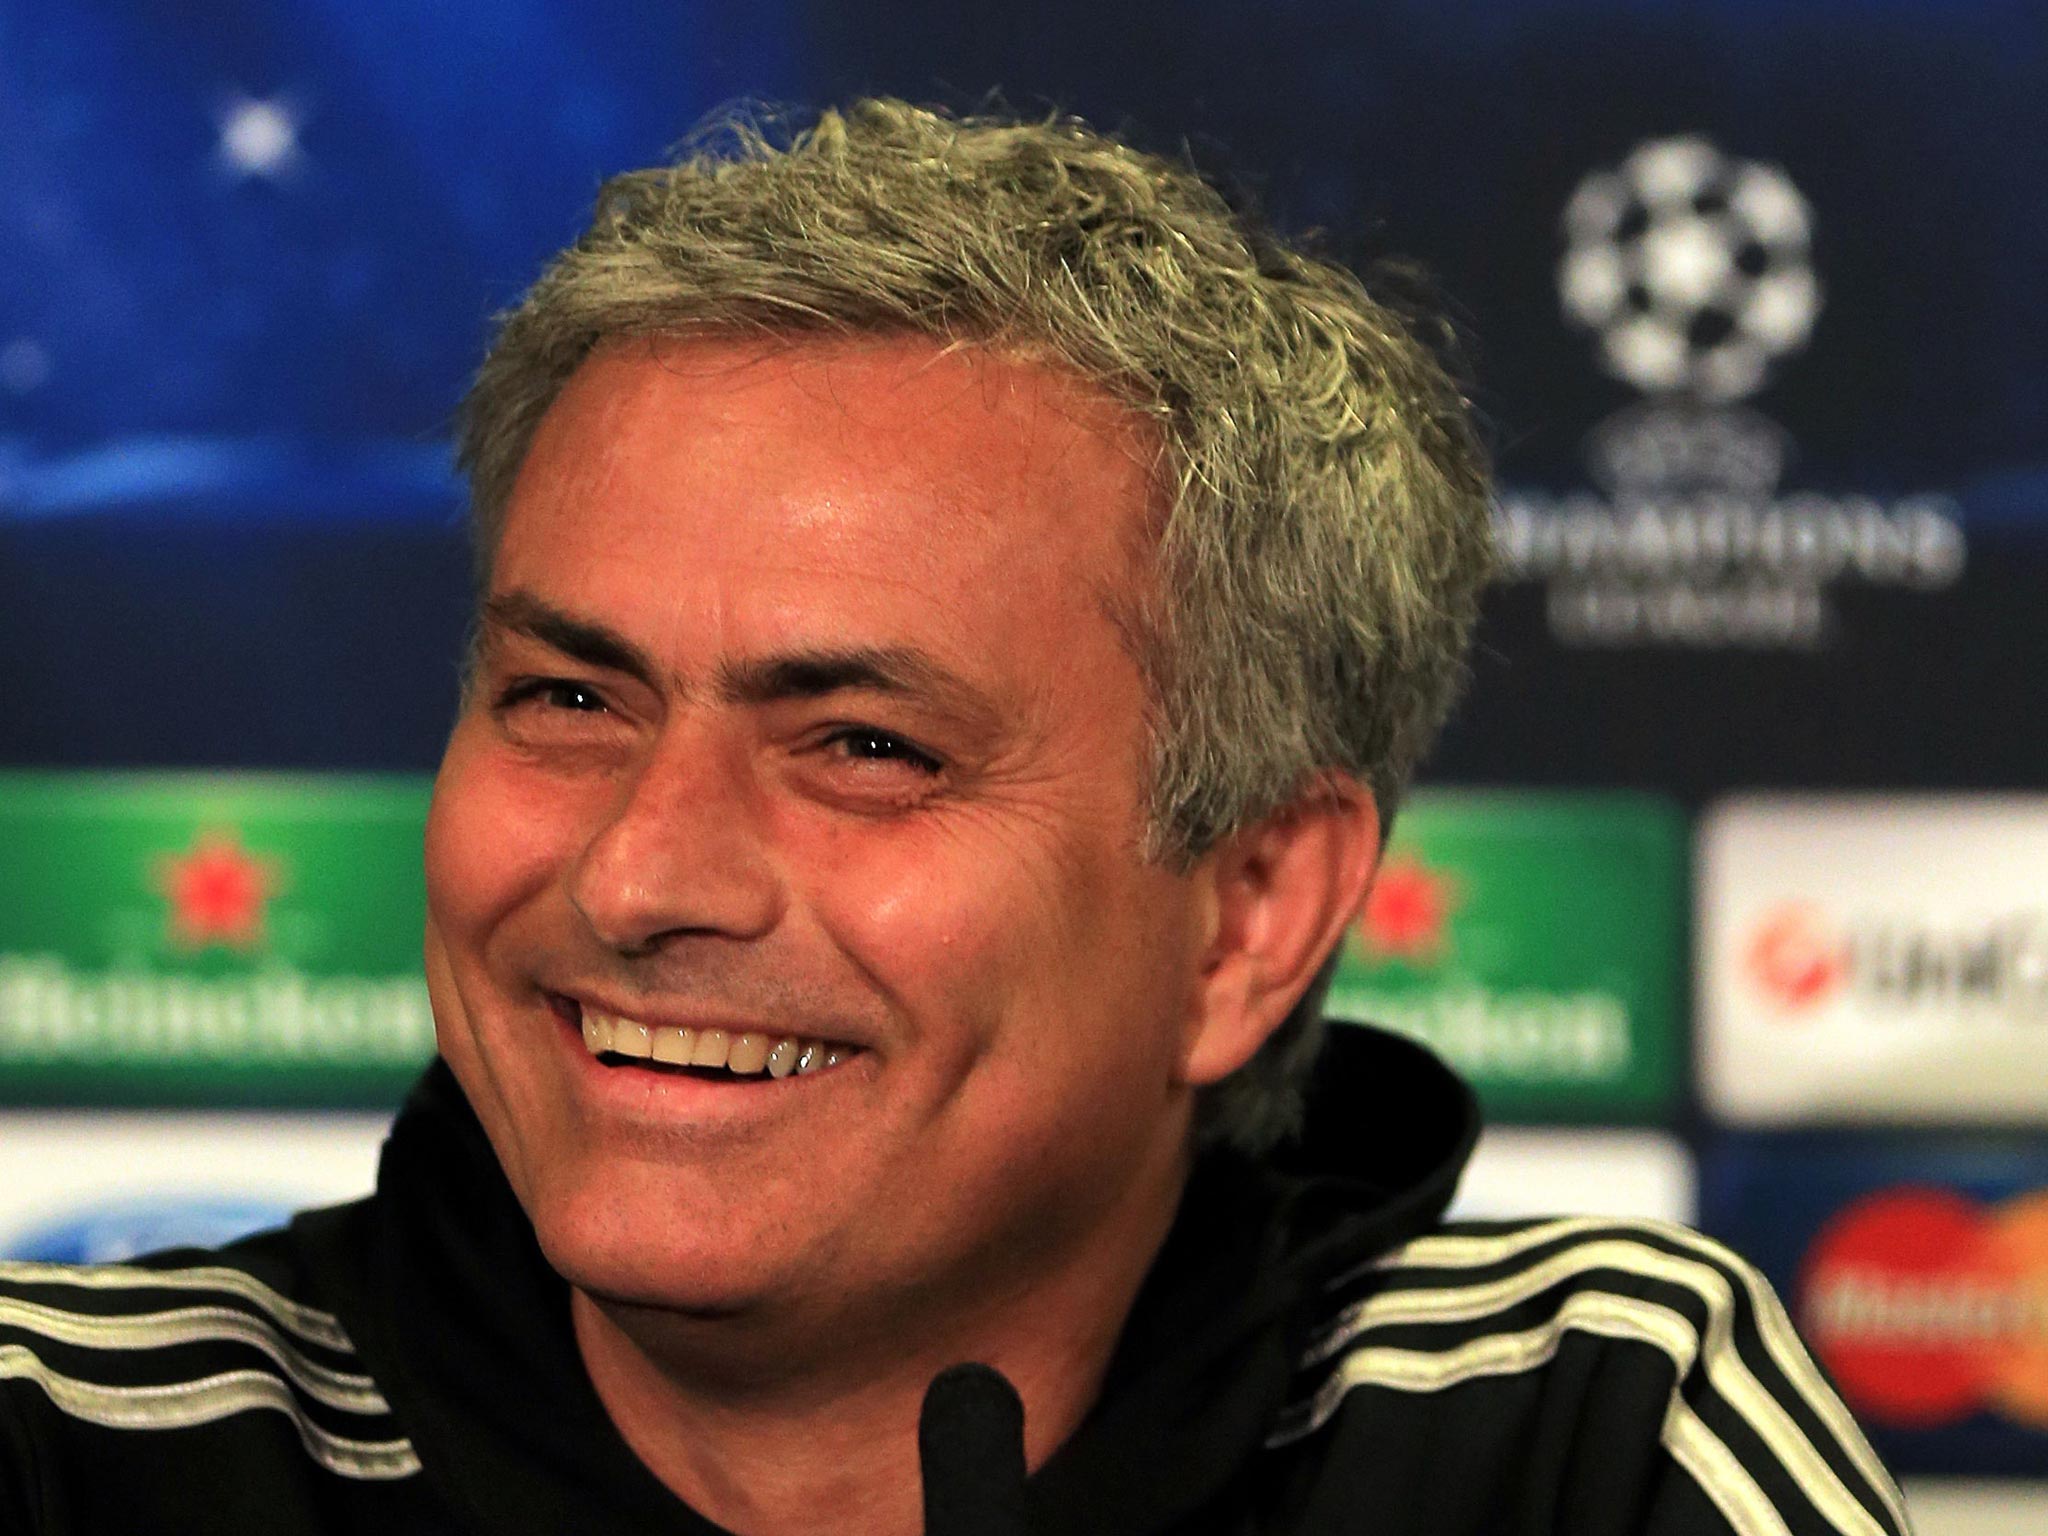 Chelsea manager Jose Mourinho has said that his Chelsea team could out-score Paris Saint-Germain and reach the Champions League semi-finals